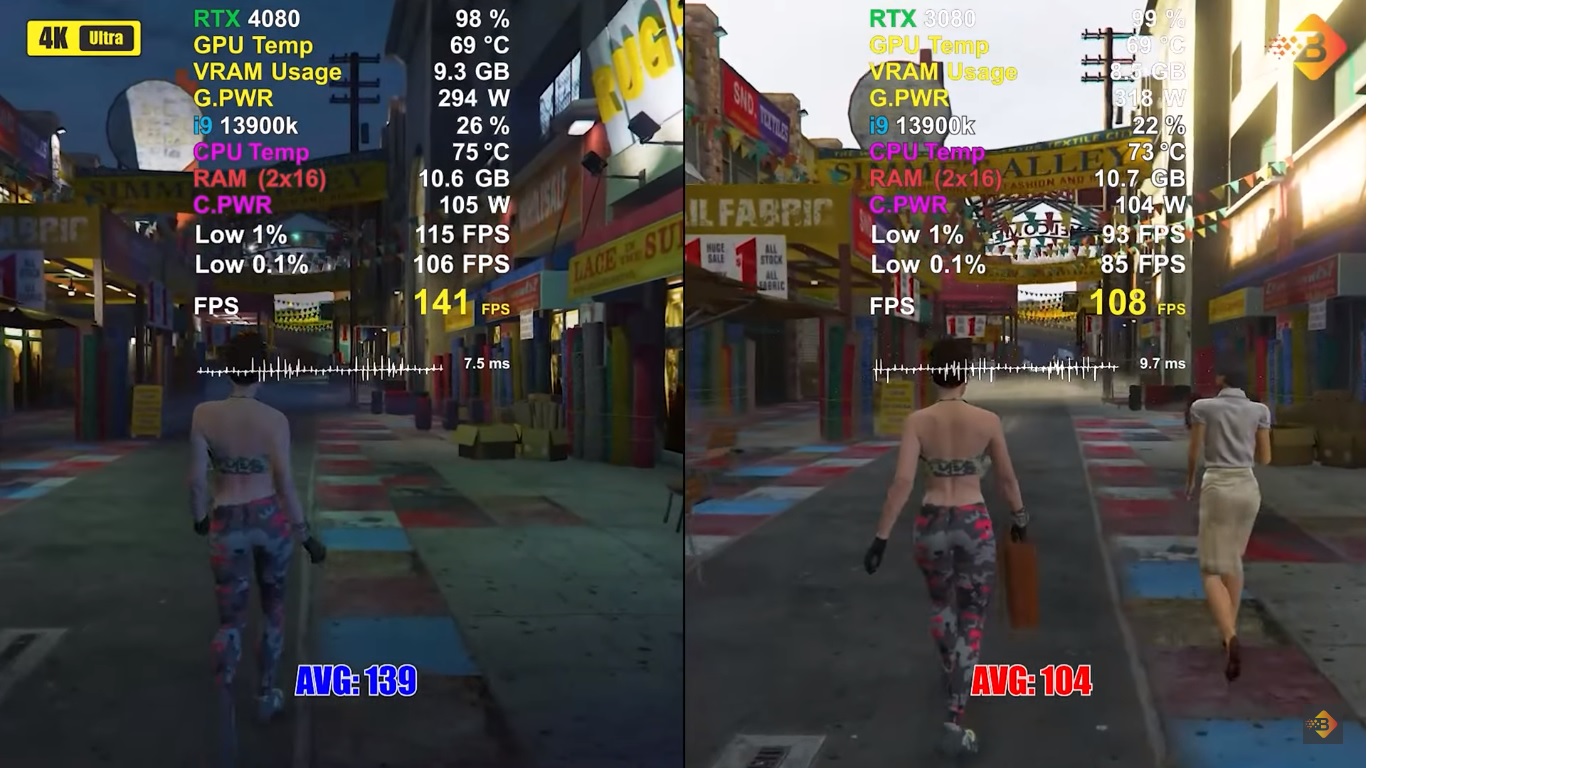 RTX 4080 vs RTX 3080 - Grand Theft Auto V 4K Benchmarks